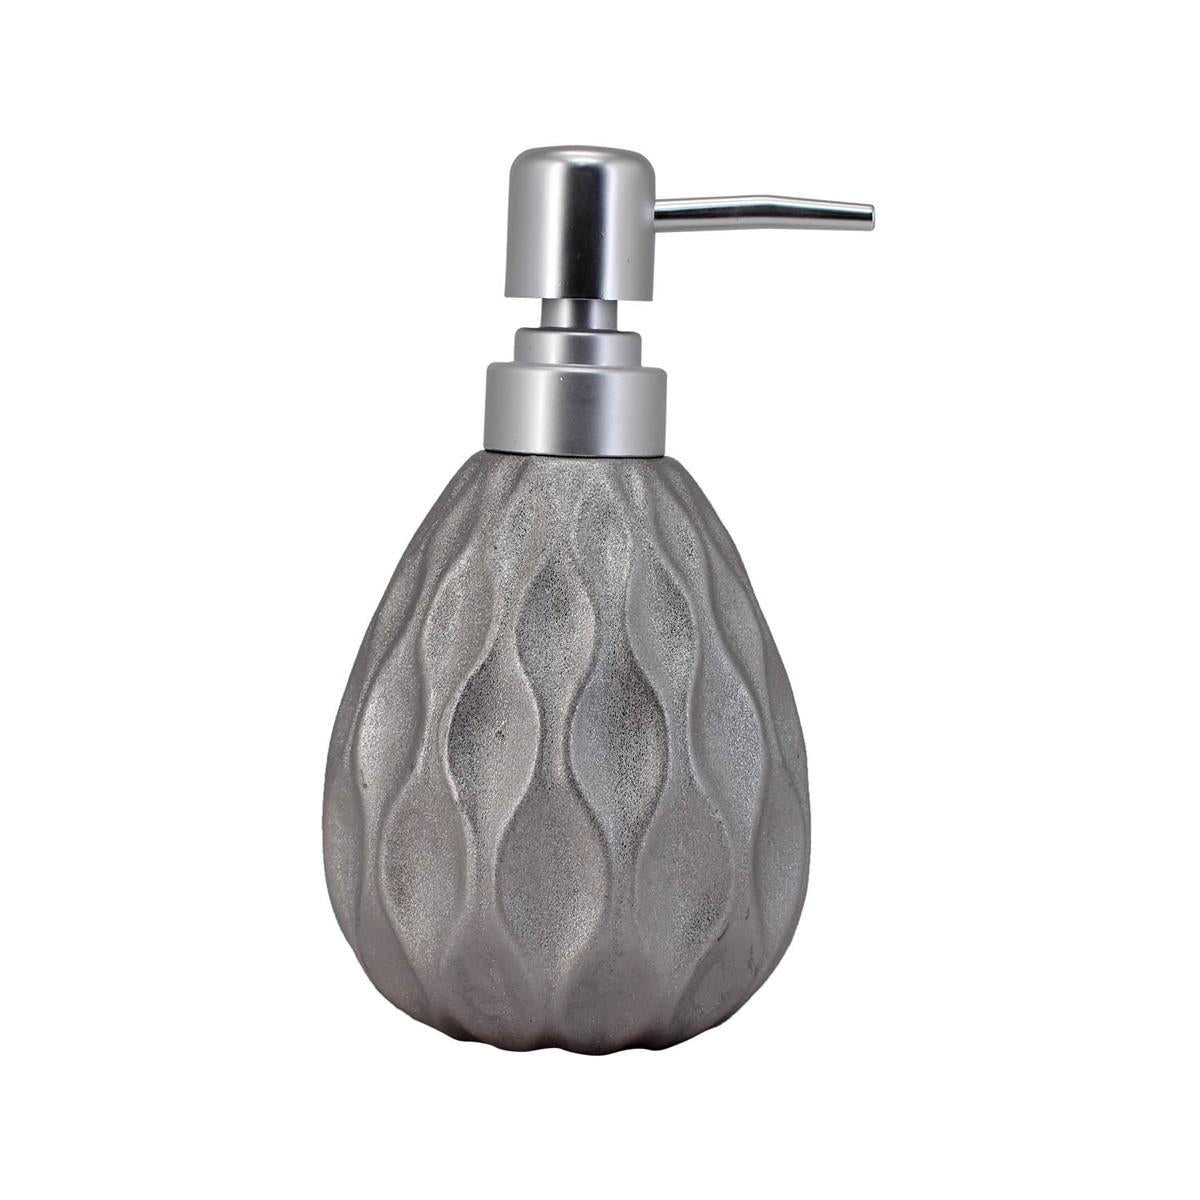 Ceramic Soap Dispenser Pump for Bathroom for Bath Gel, Lotion, Shampoo (7630)